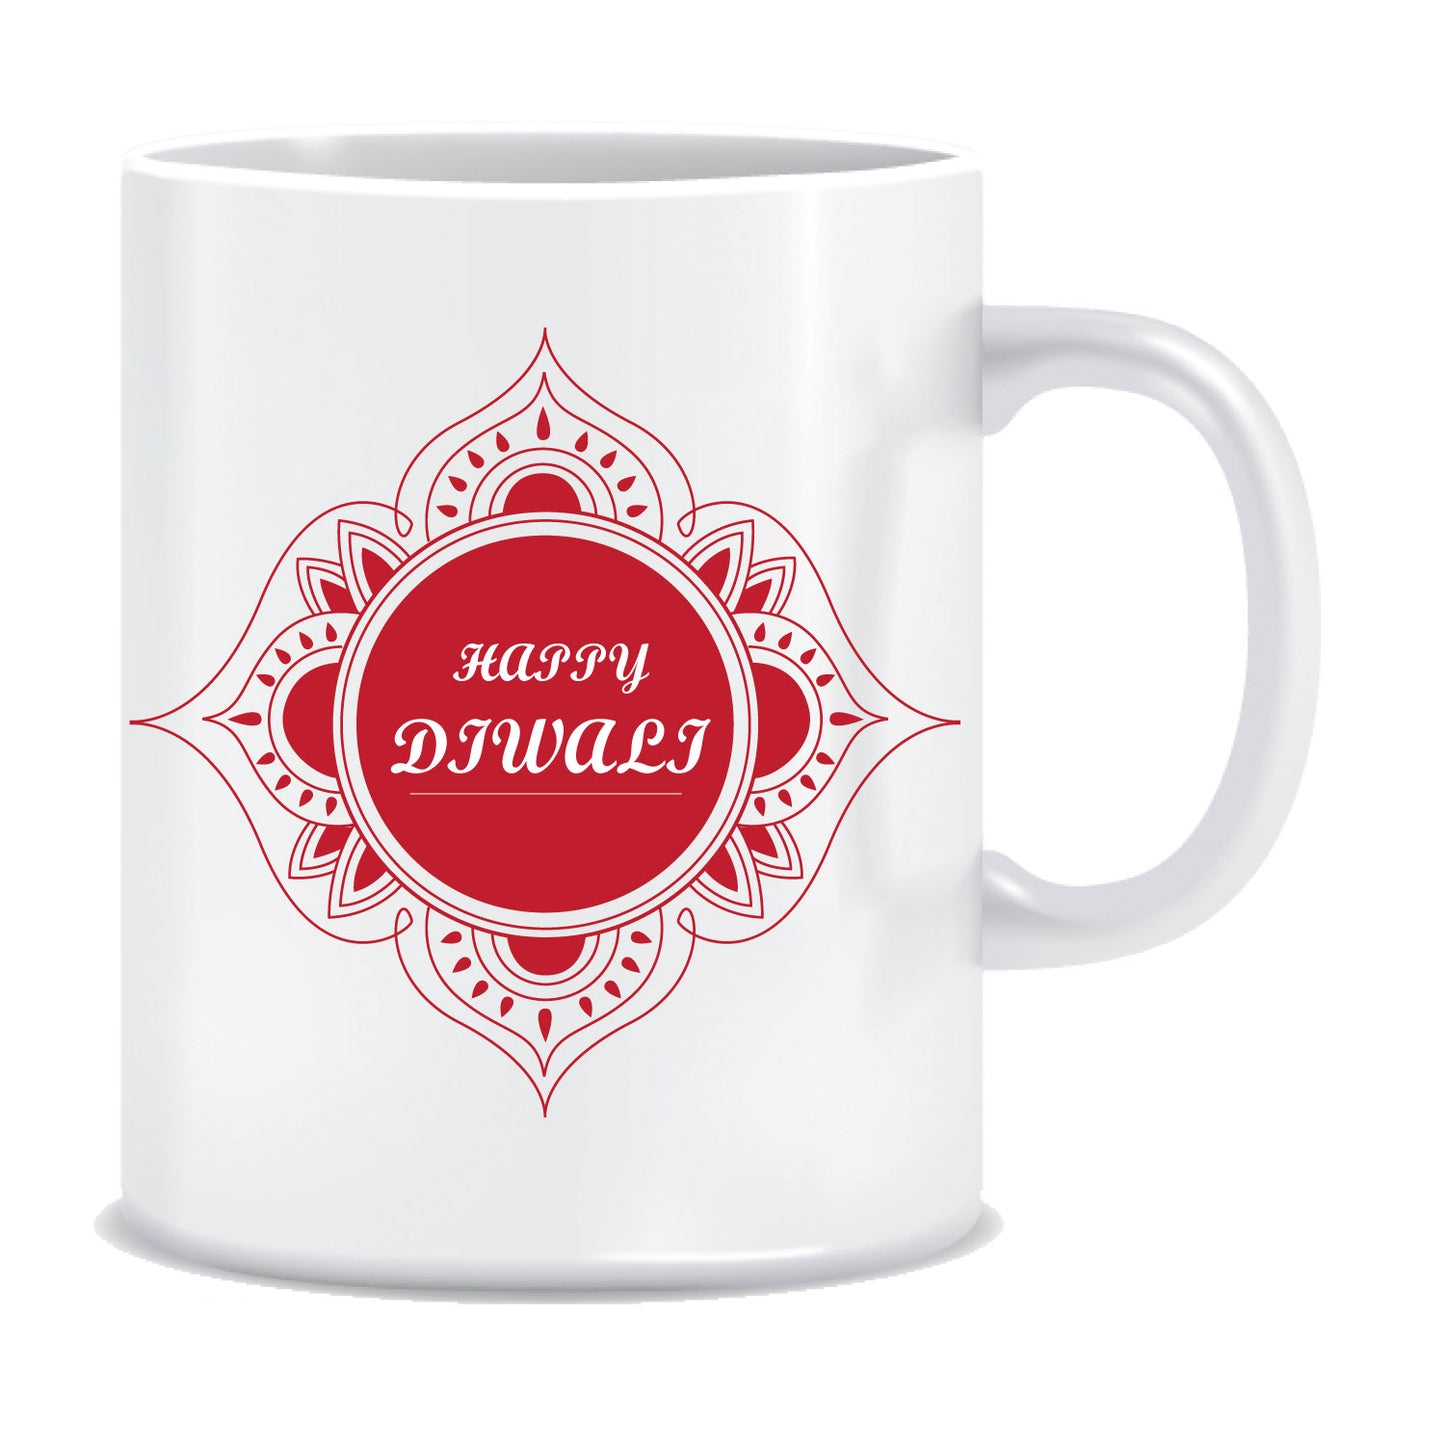 Diwali greetings gifts Printed Ceramic Coffee Tea Mug ED119